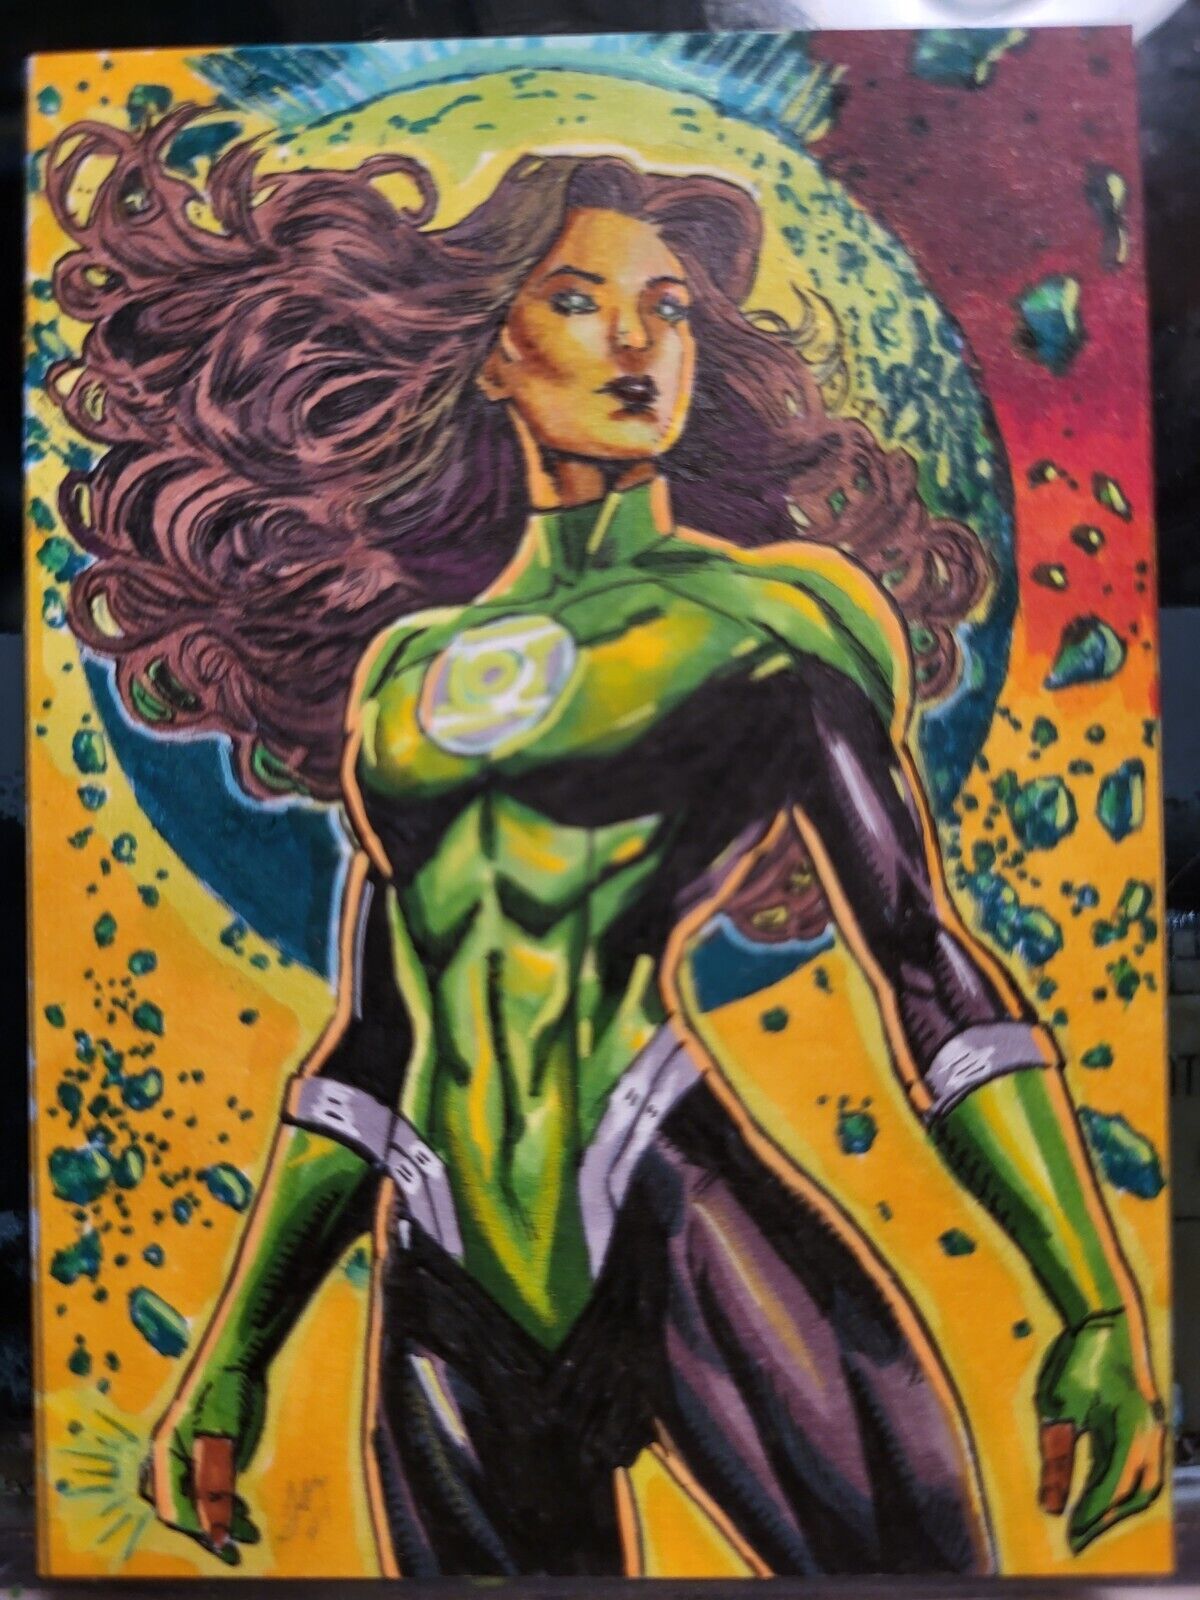 Jessica Cruz Green Lantern DC Comics 1/1 Sketch Card signed by Todd Mulrooney